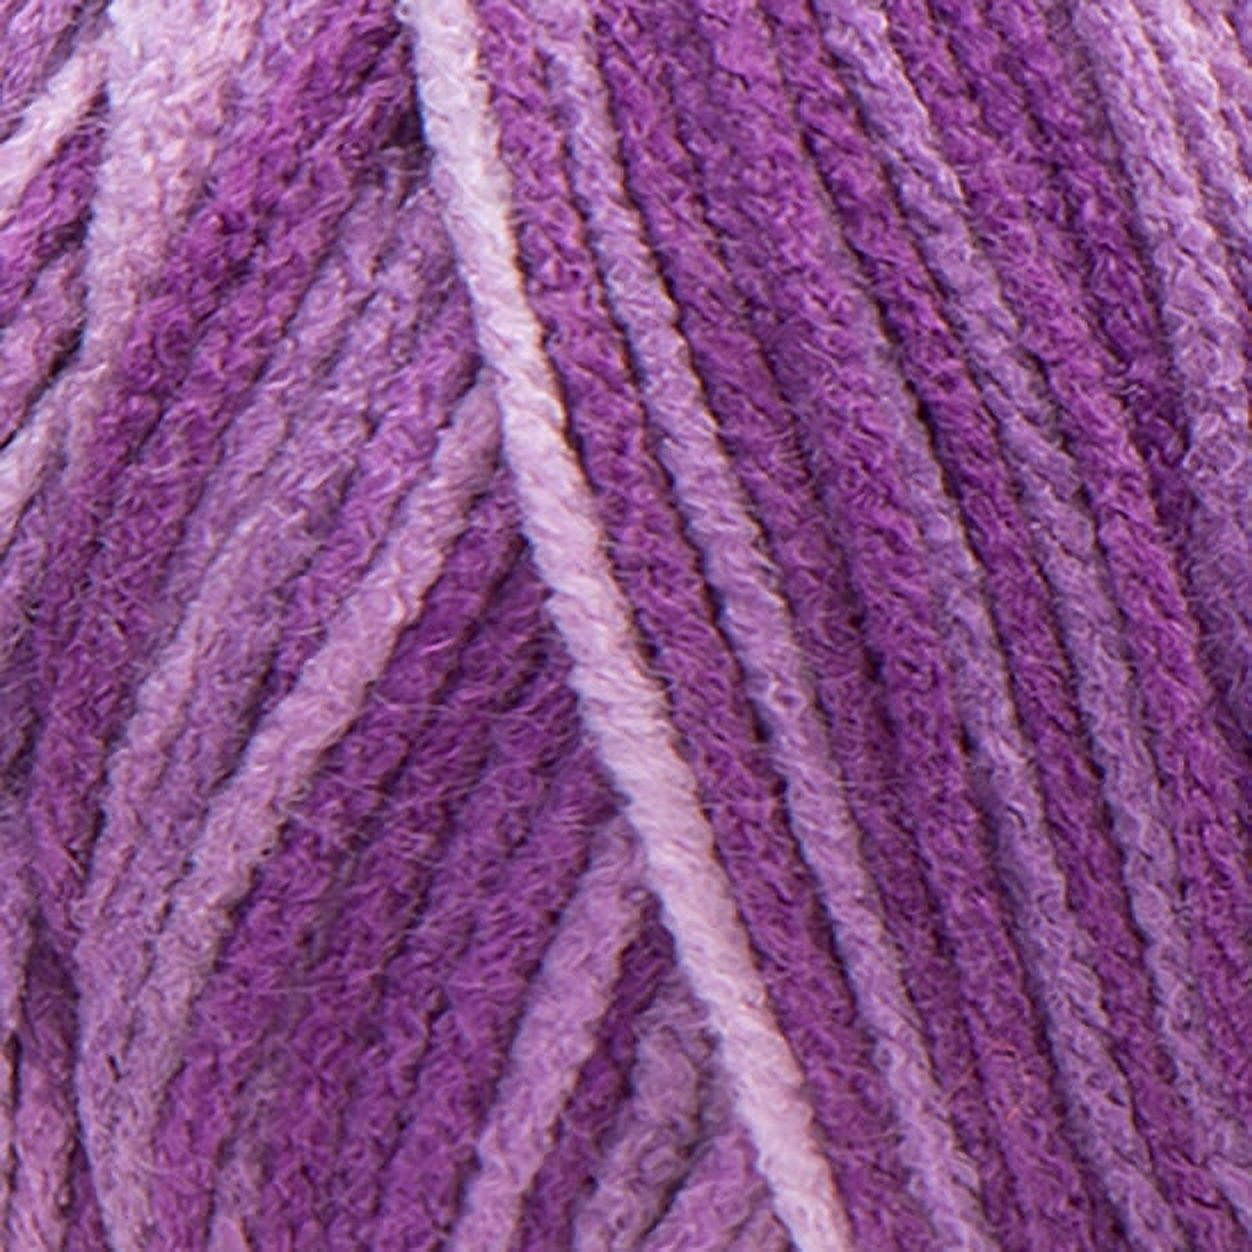 Red Heart® Super Saver® #4 Medium Acrylic Yarn, Purple Tones 5oz/142g, 236 Yards - image 2 of 6